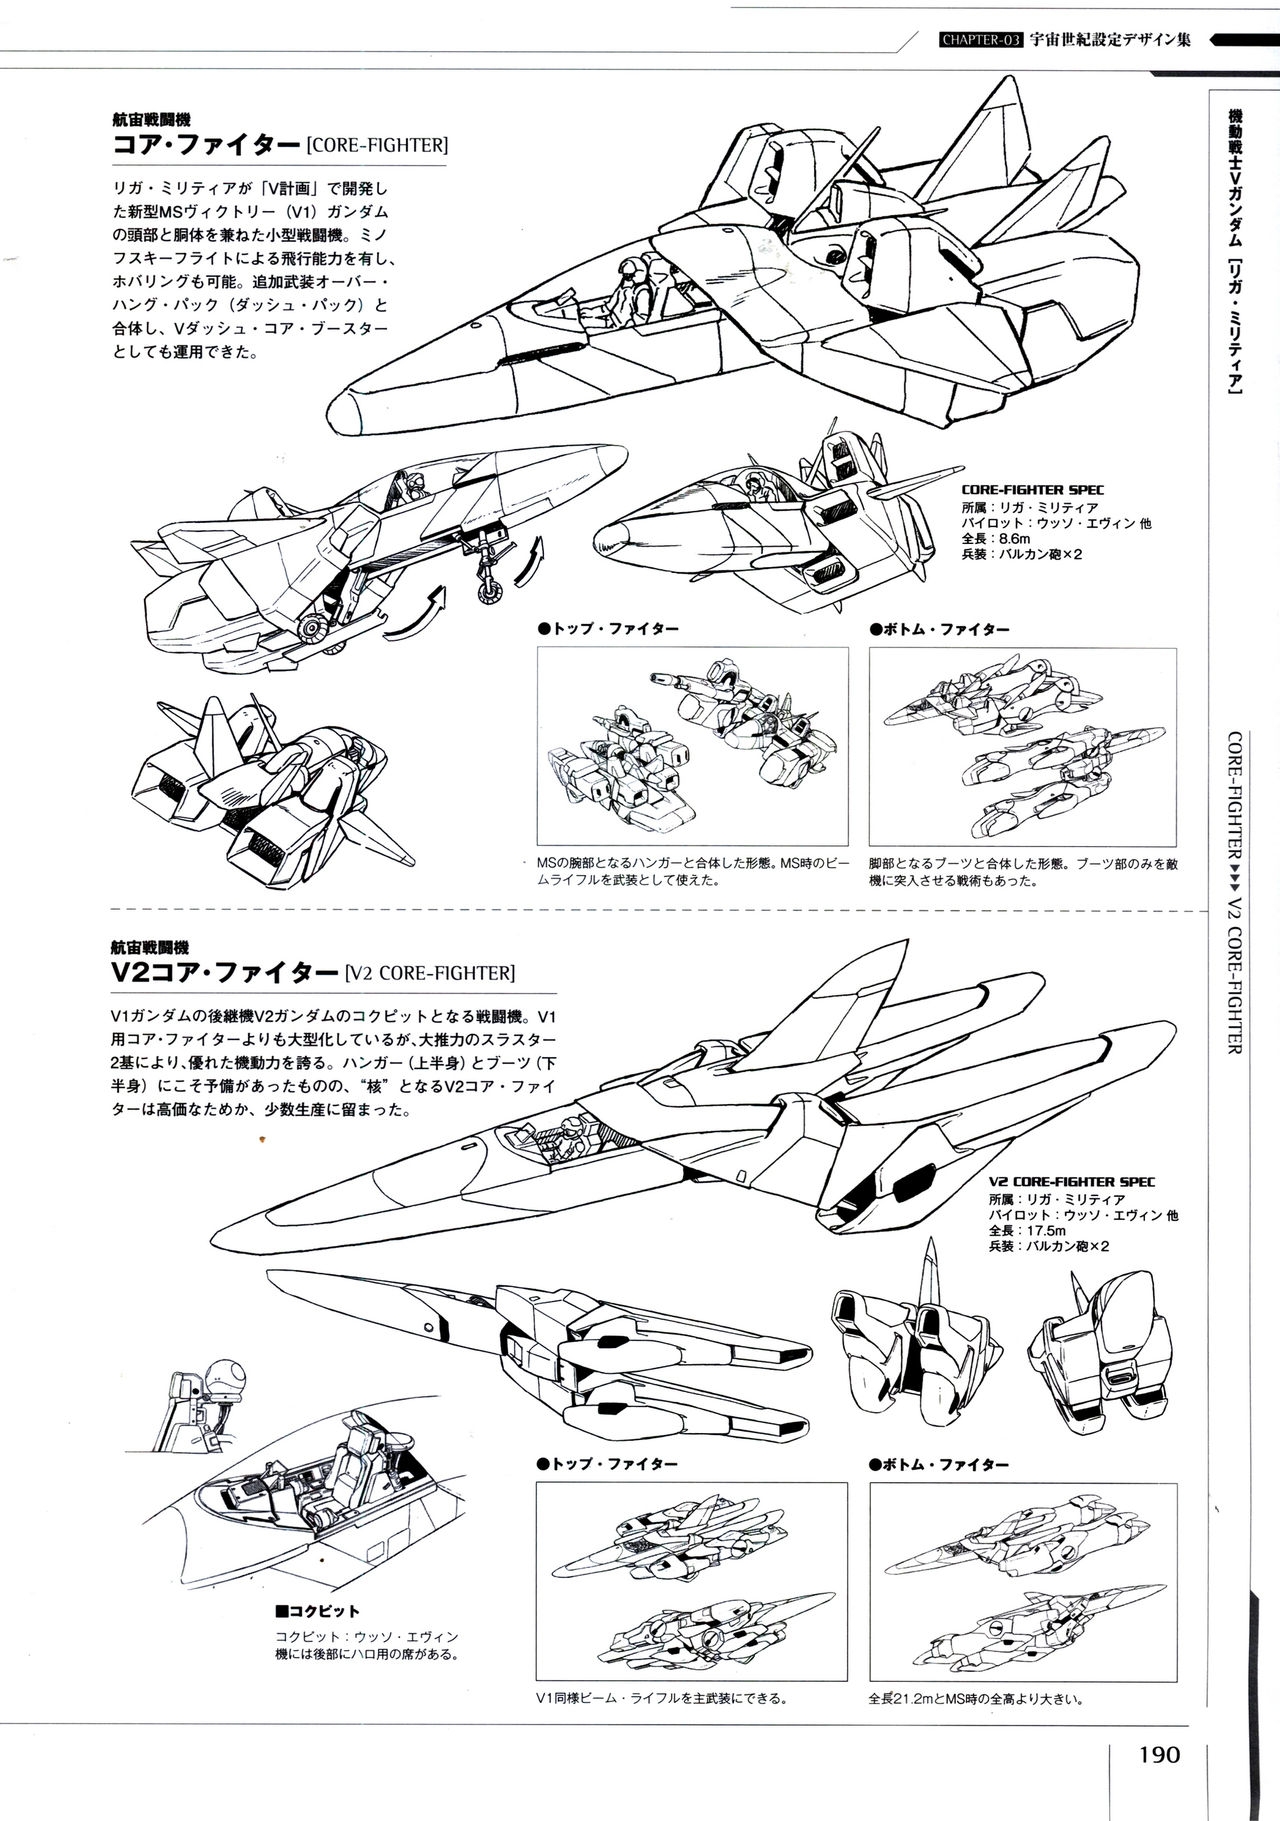 Mobile Suit Gundam - Ship & Aerospace Plane Encyclopedia - Revised Edition 195